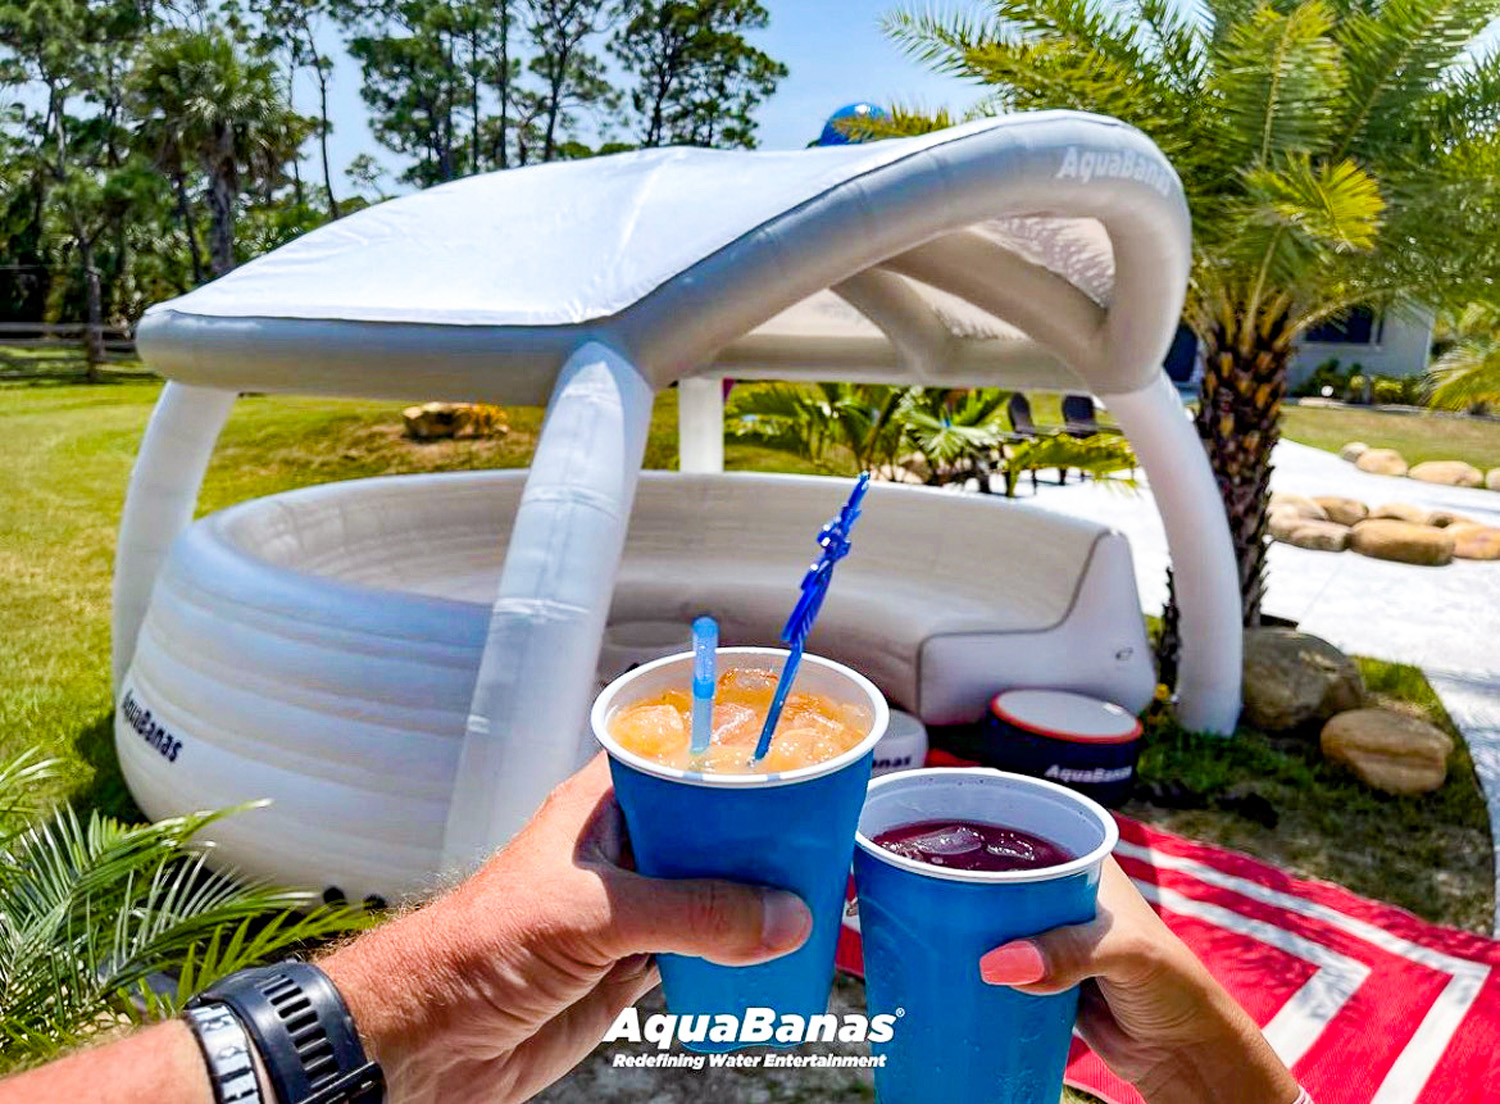 aquabanas-product-couch-bana-galery-lifestyle.jpg